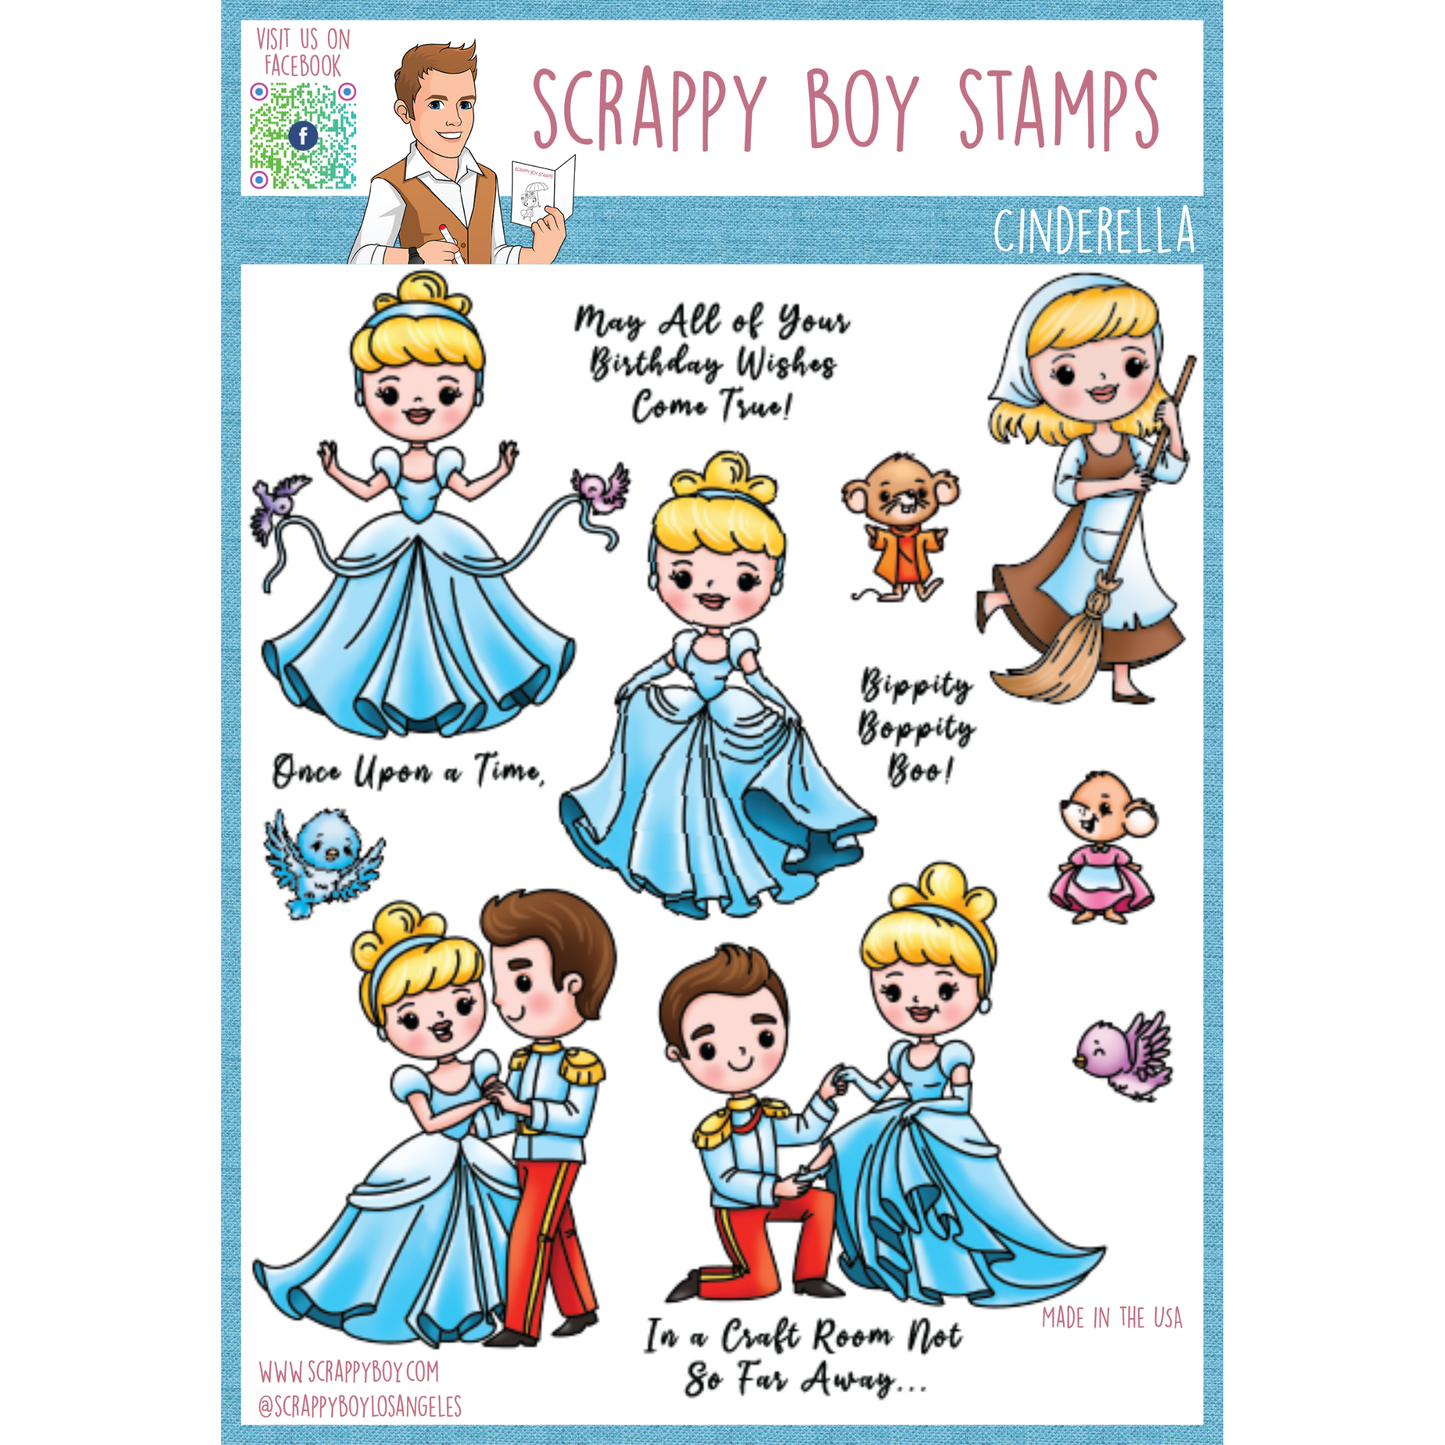 
                  
                    Bundle - Cinderella Stamp & Outline Dies scrappyboystamps
                  
                